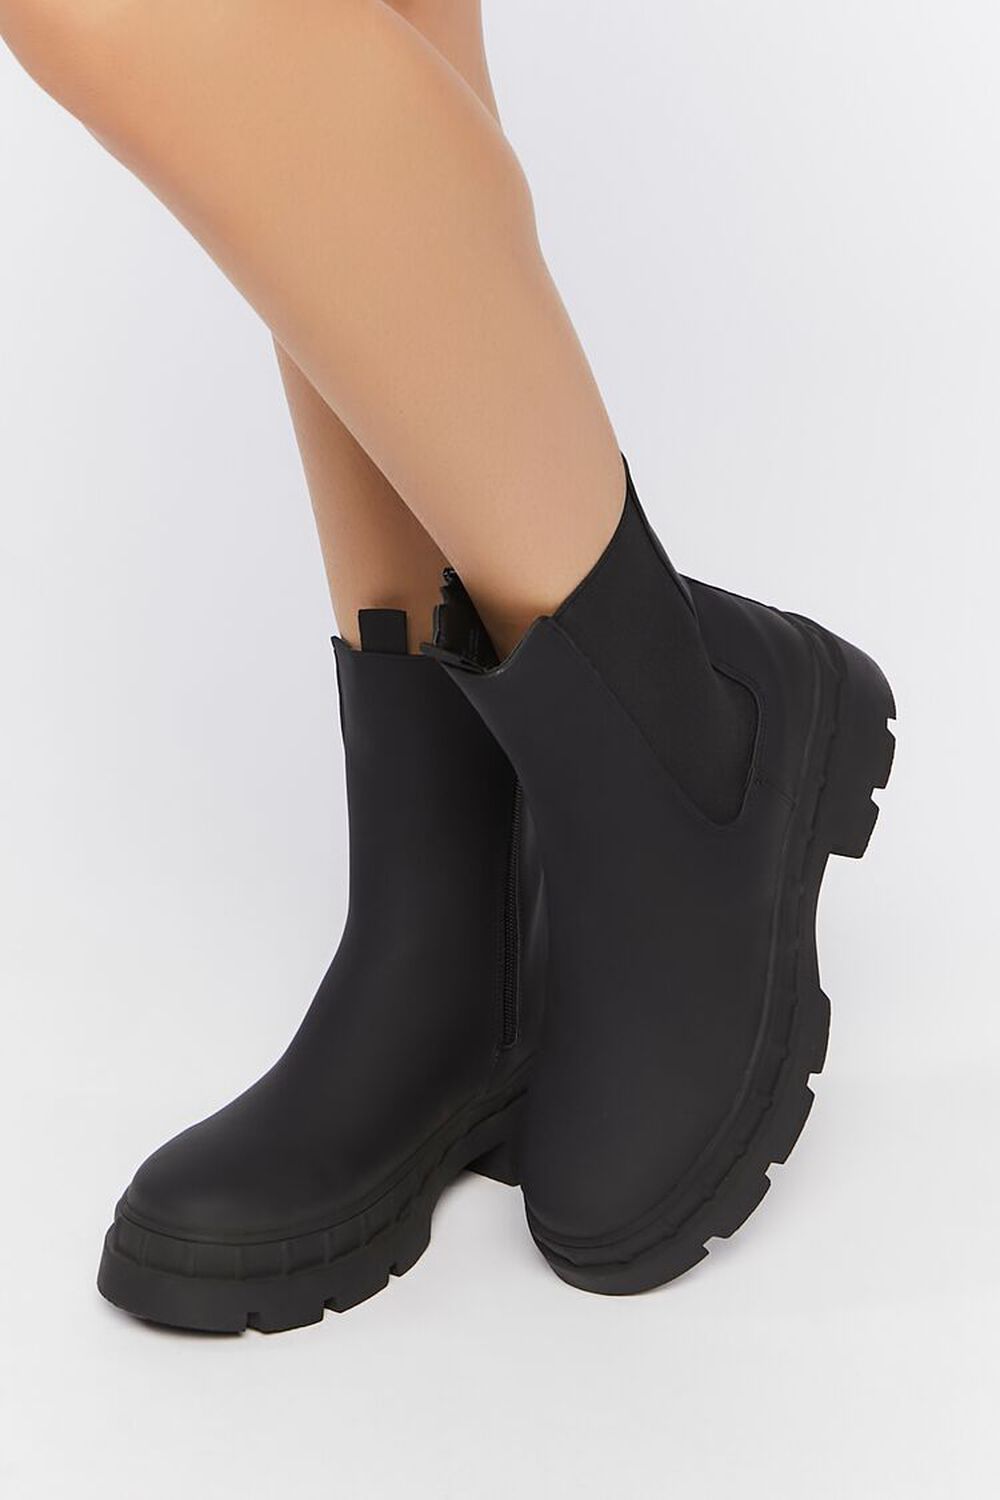 BLACK Lug-Sole Chelsea Boots, image 1